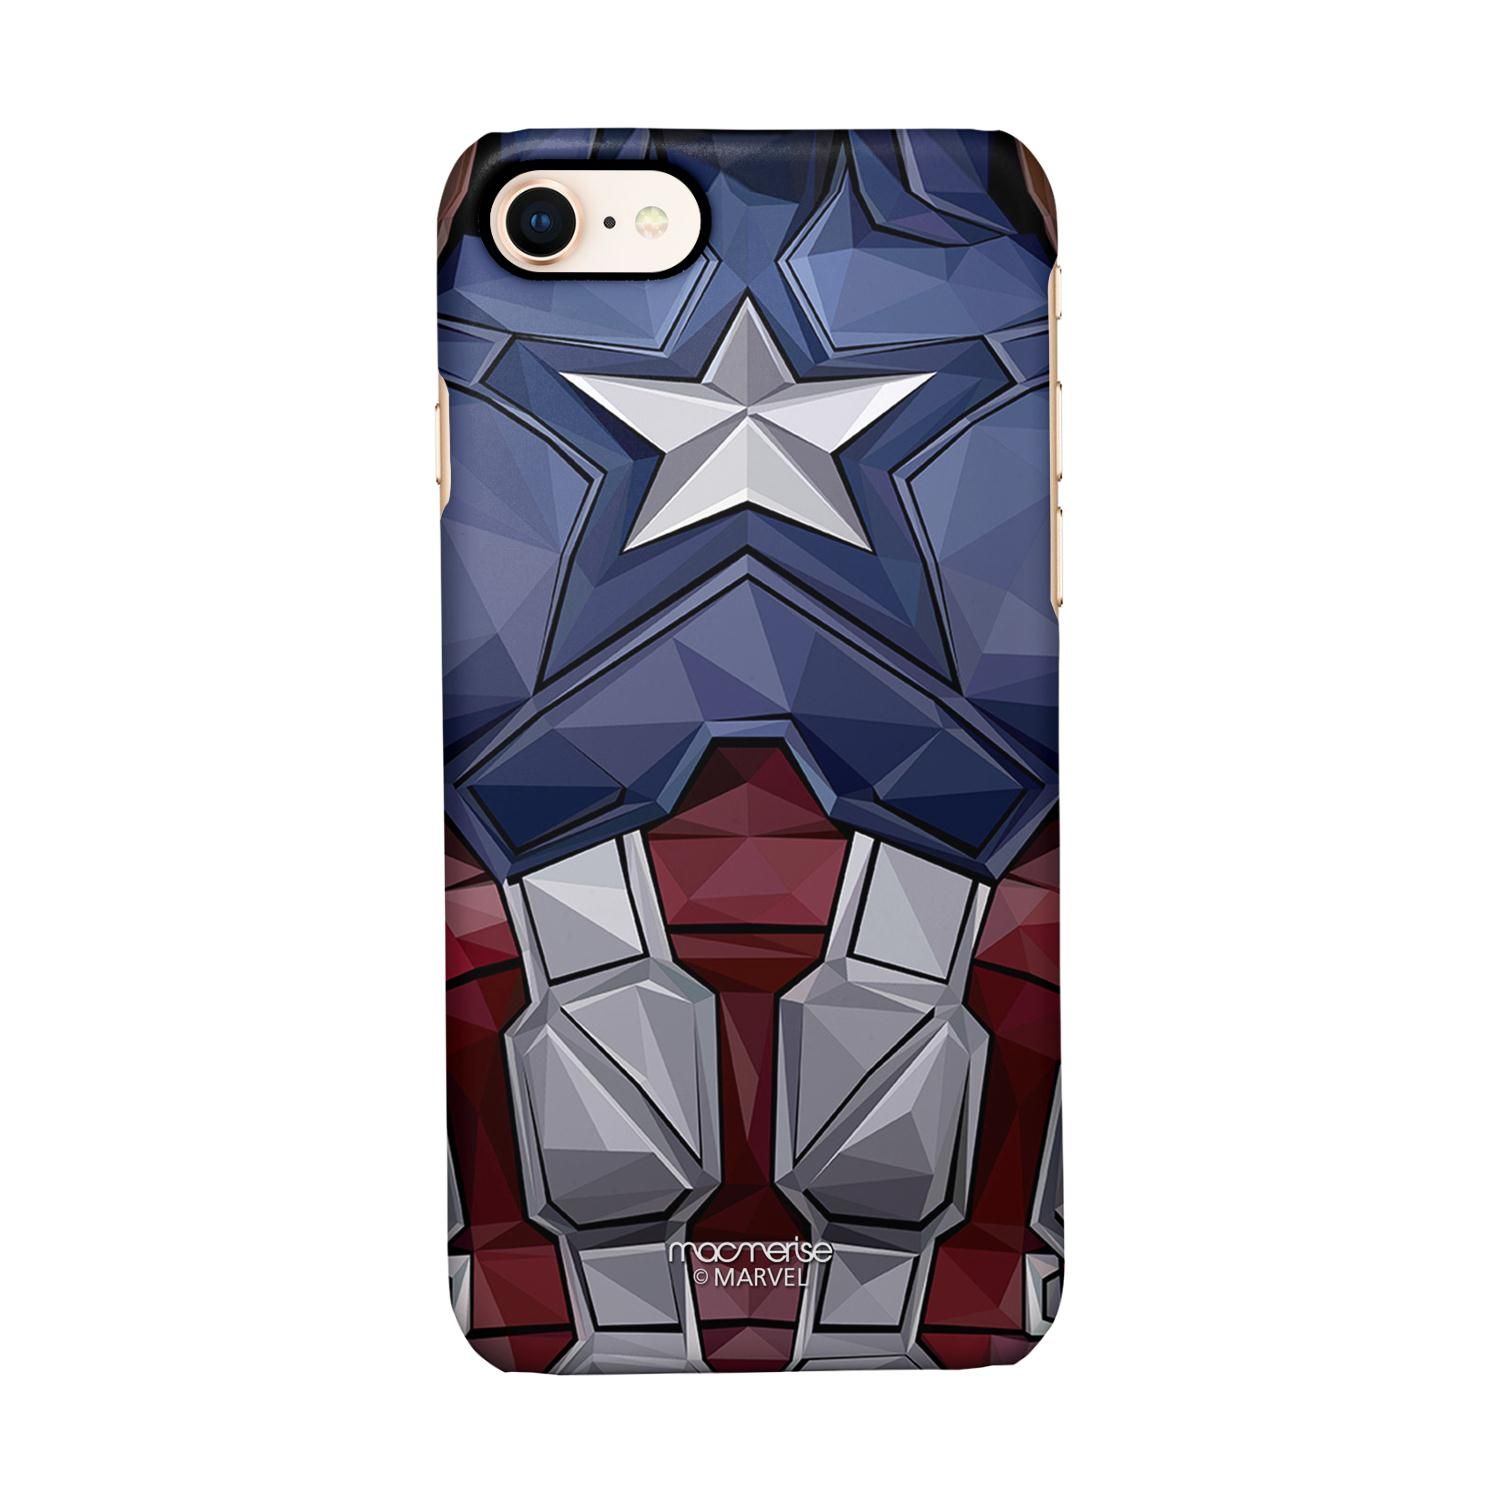 Buy Captain America Vintage Suit - Sleek Phone Case for iPhone 7 Online